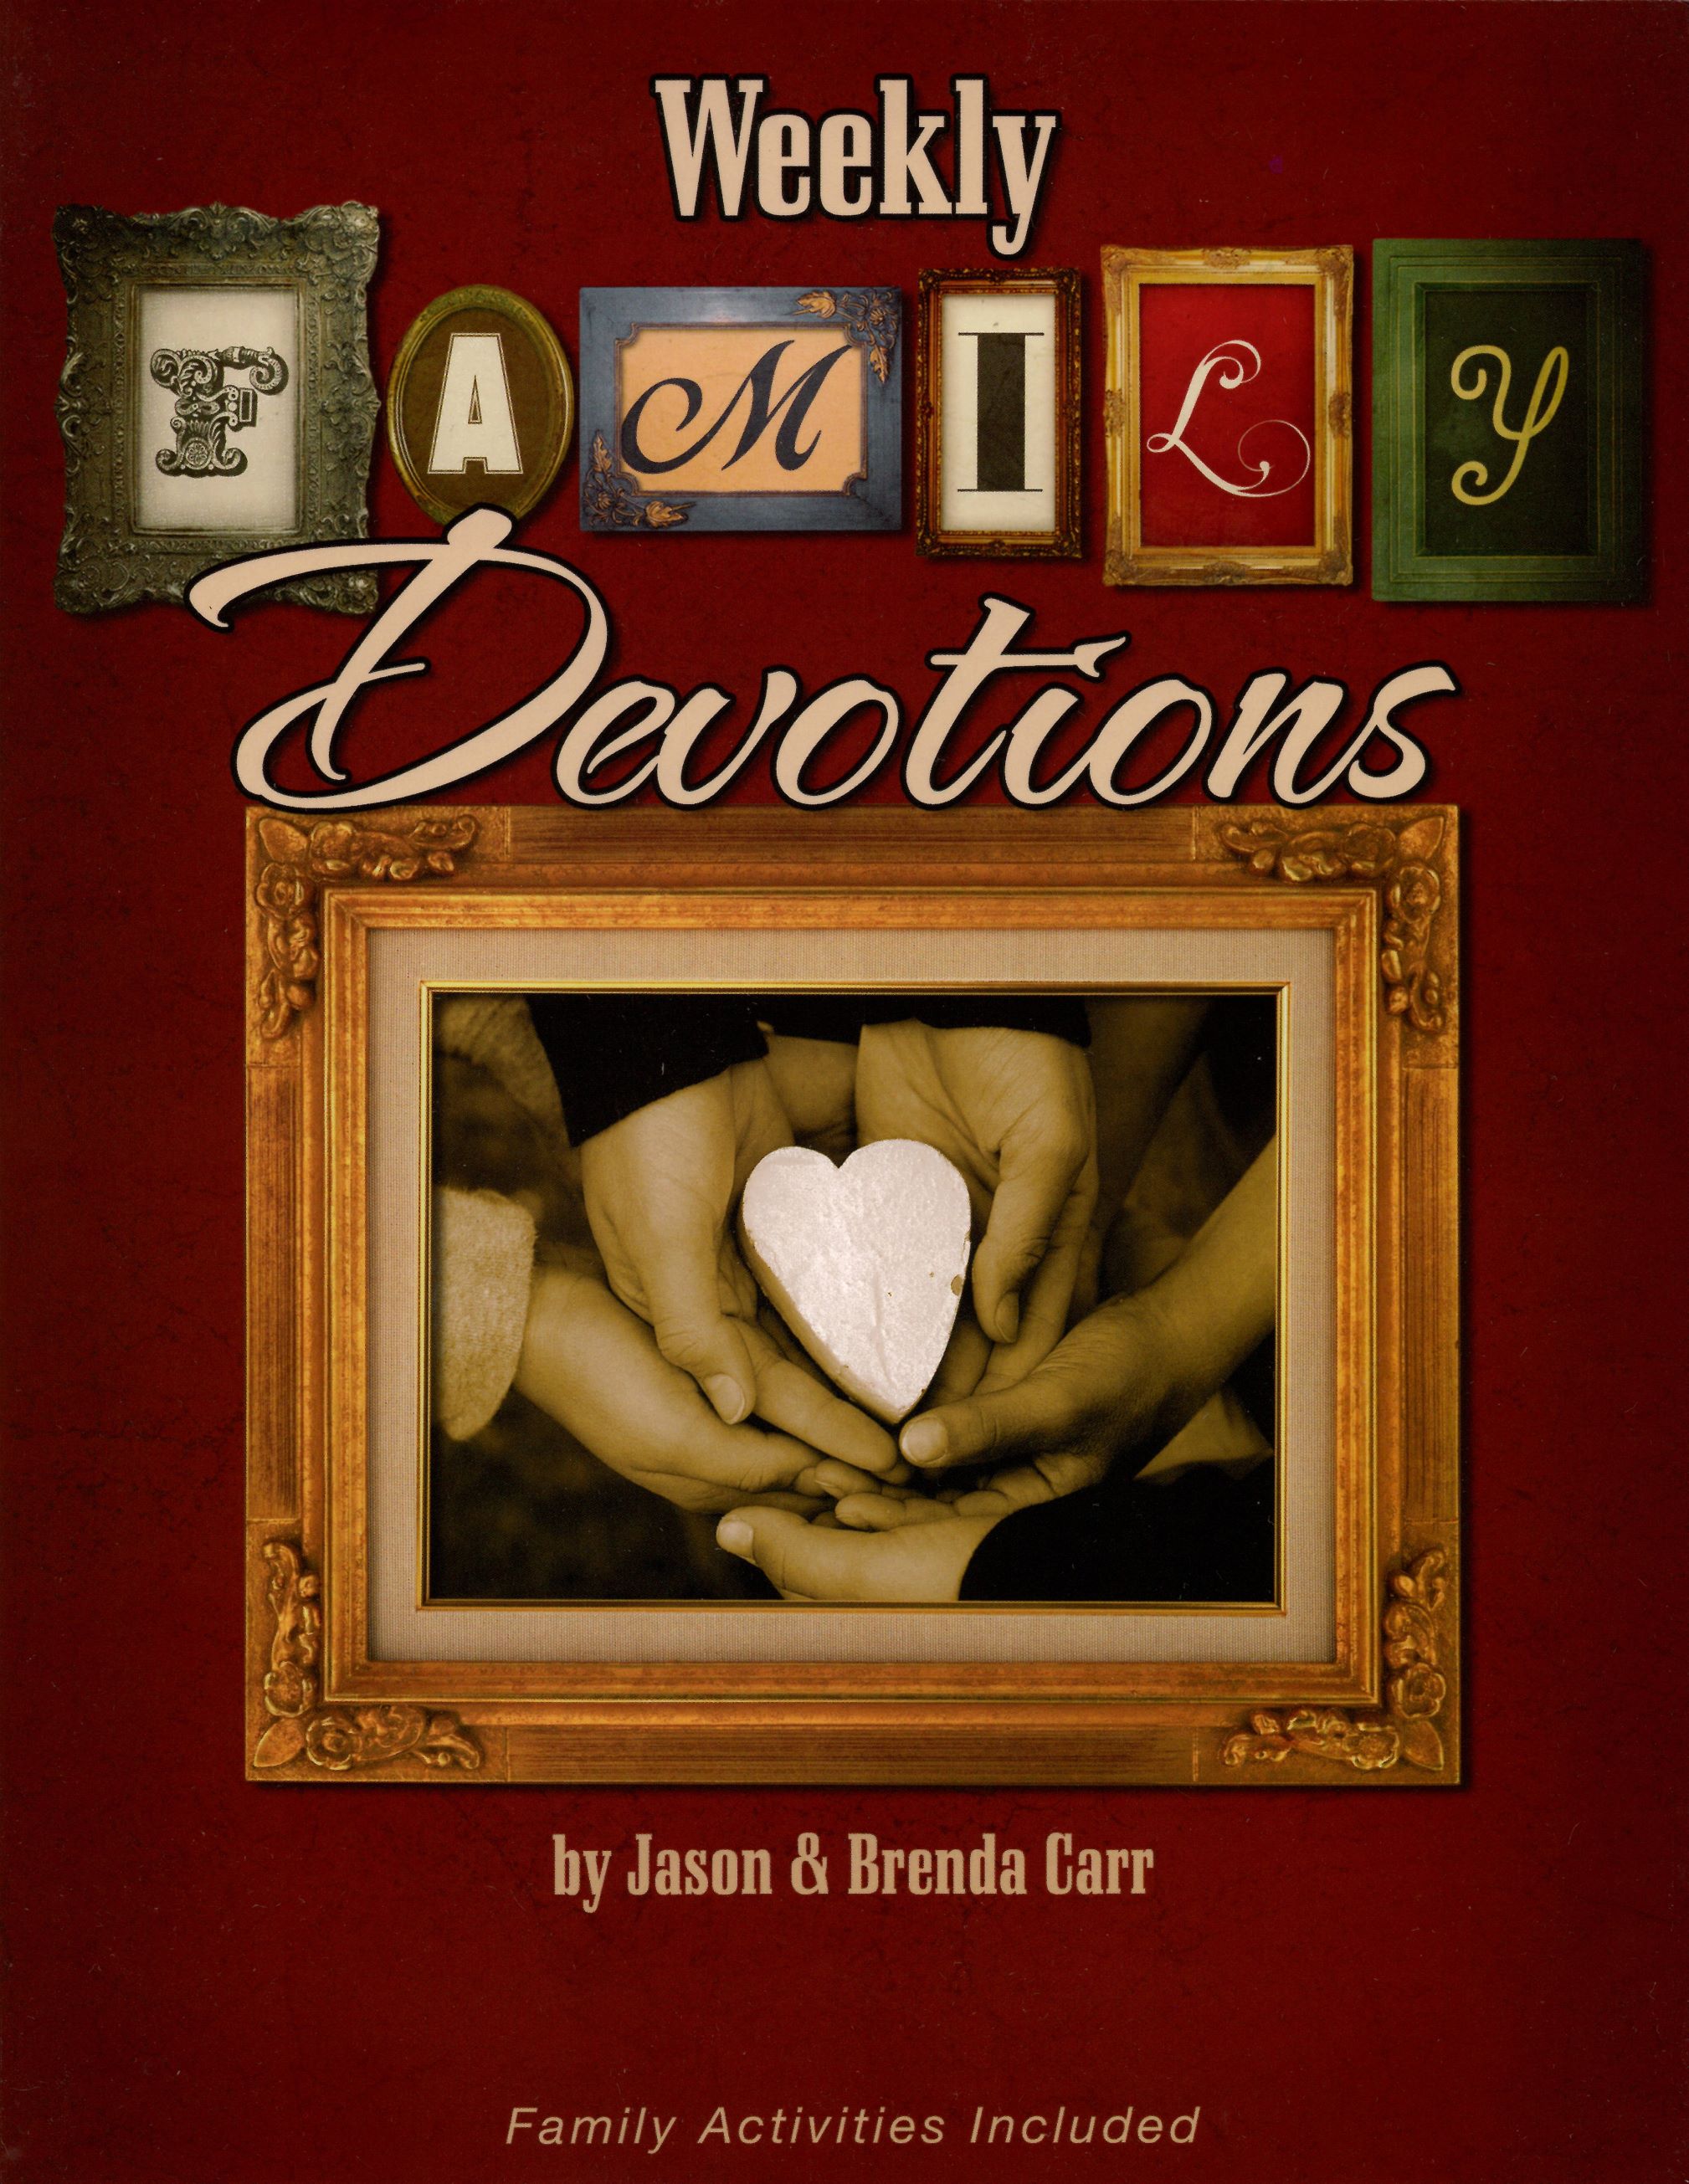 Weekly Family Devotions - Jason & Brenda Carr